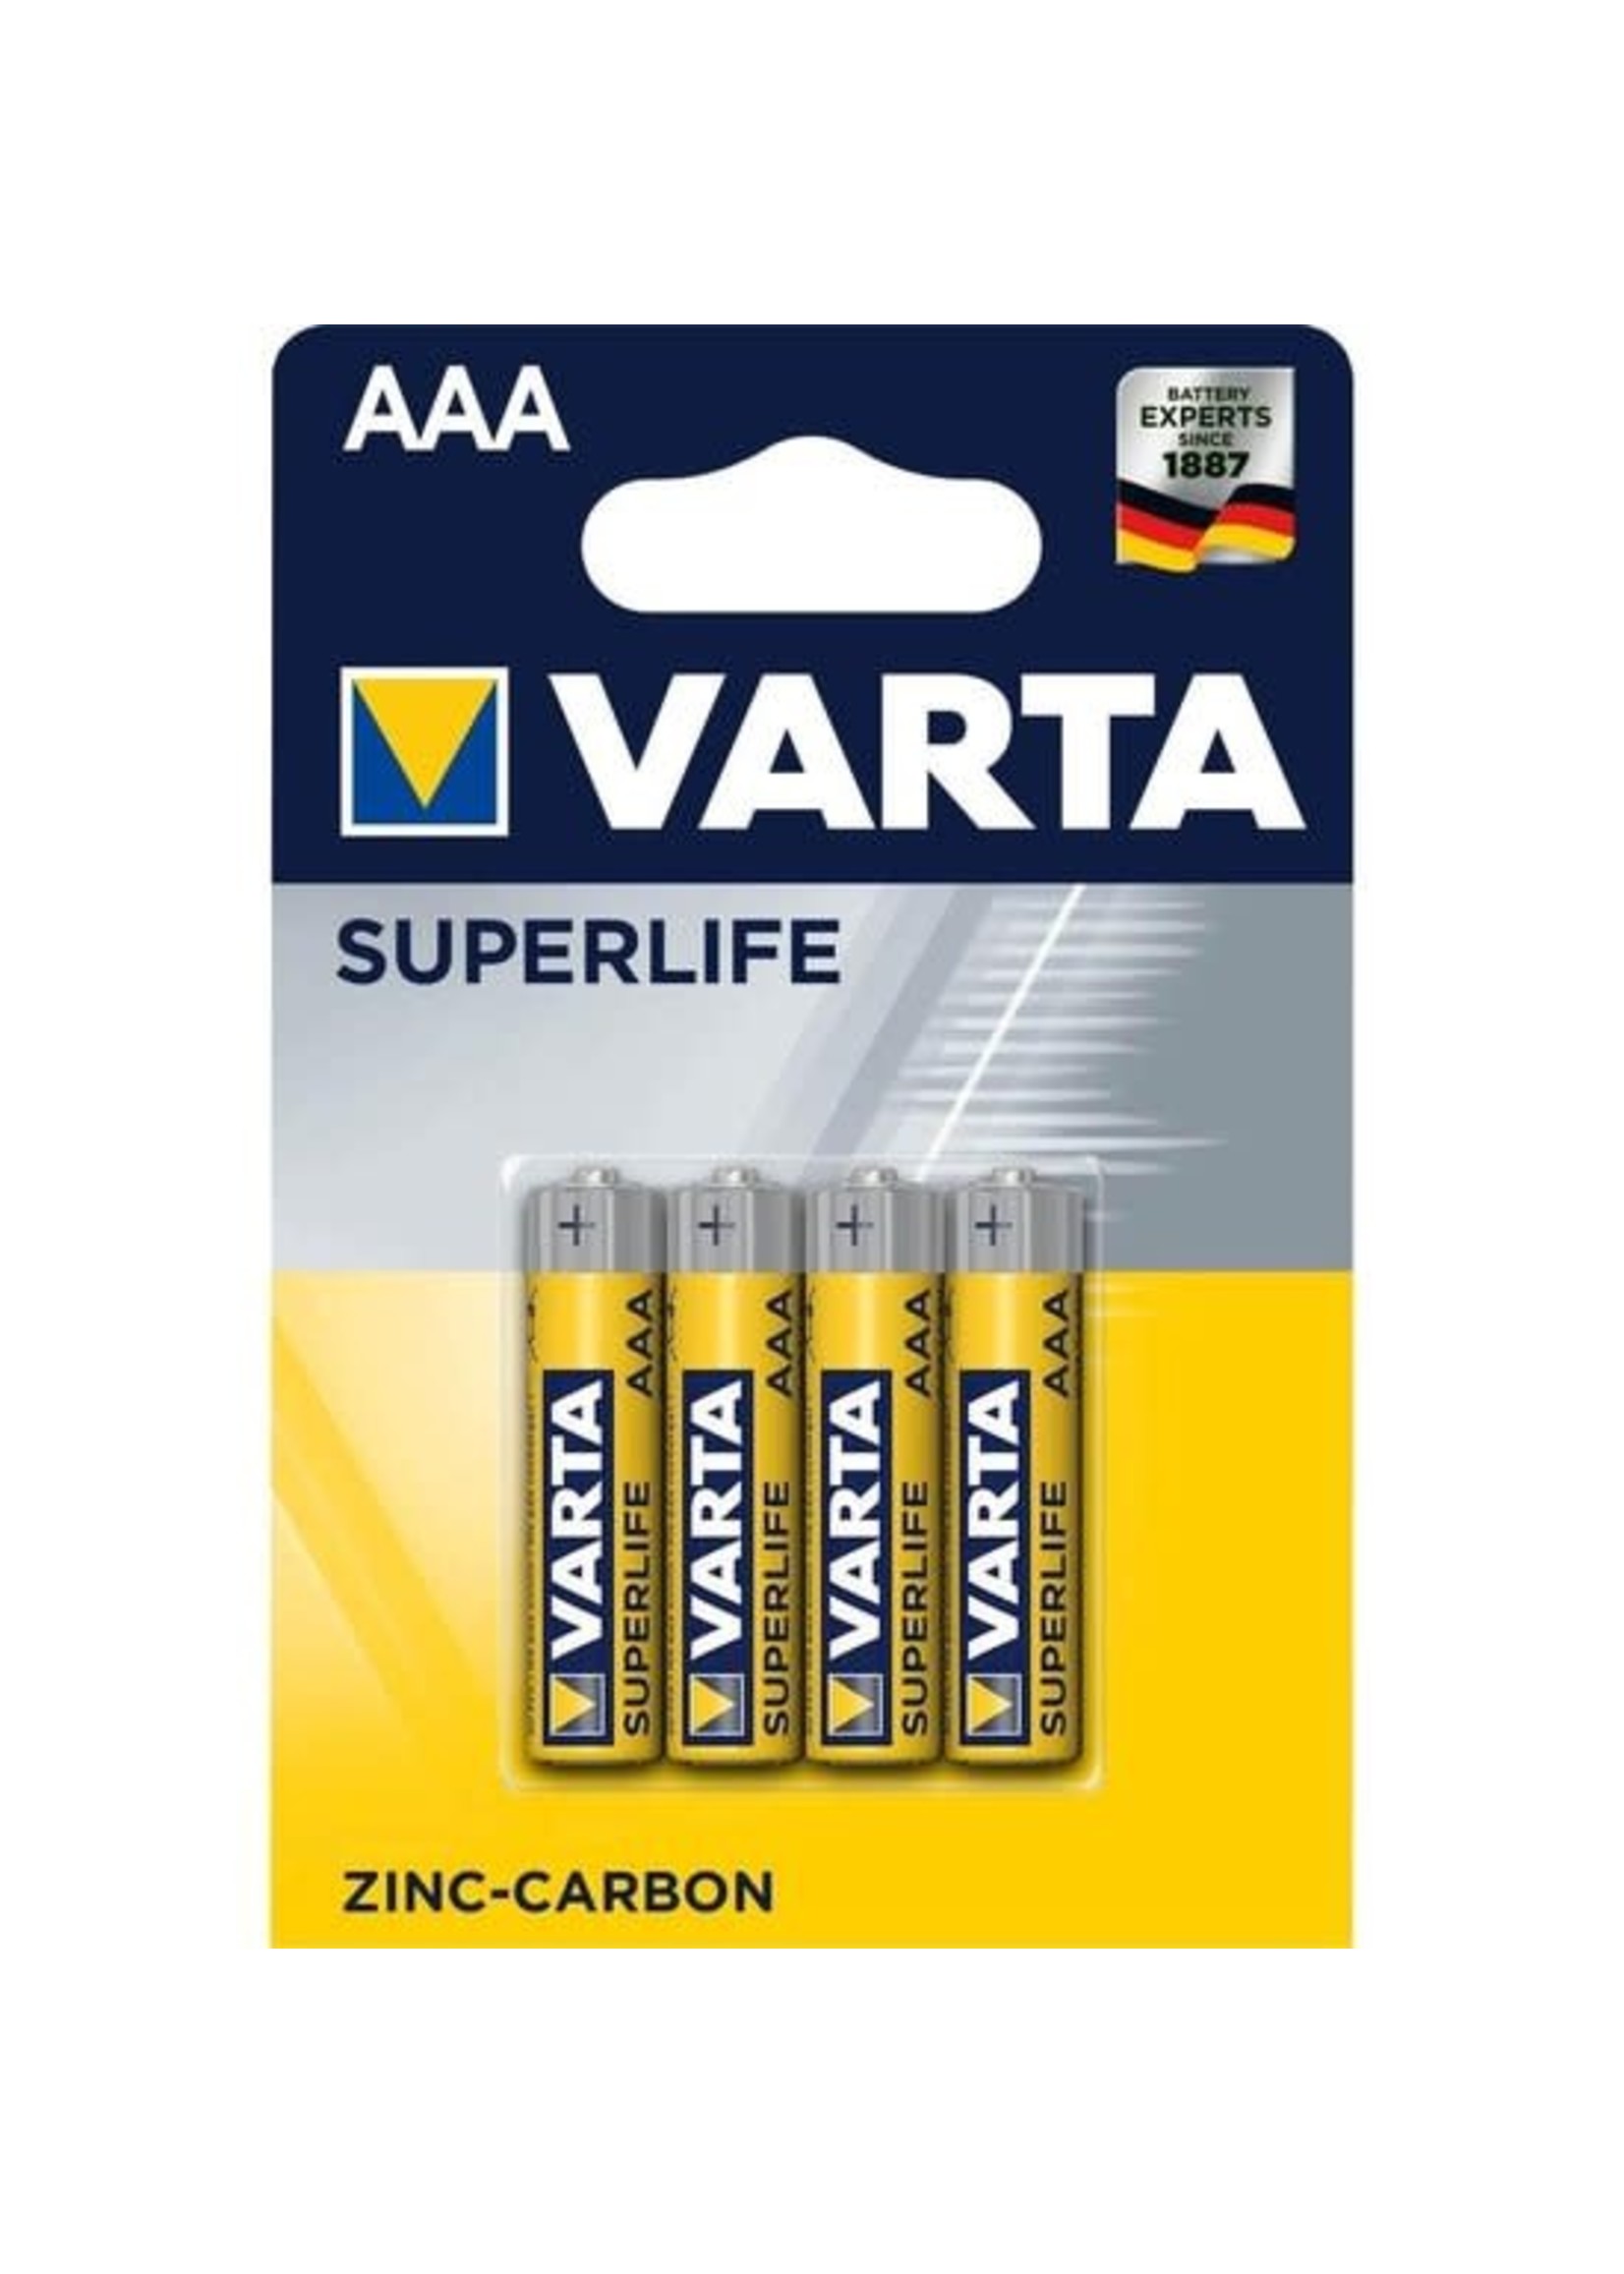 Varta AAA Superlife Batterijen